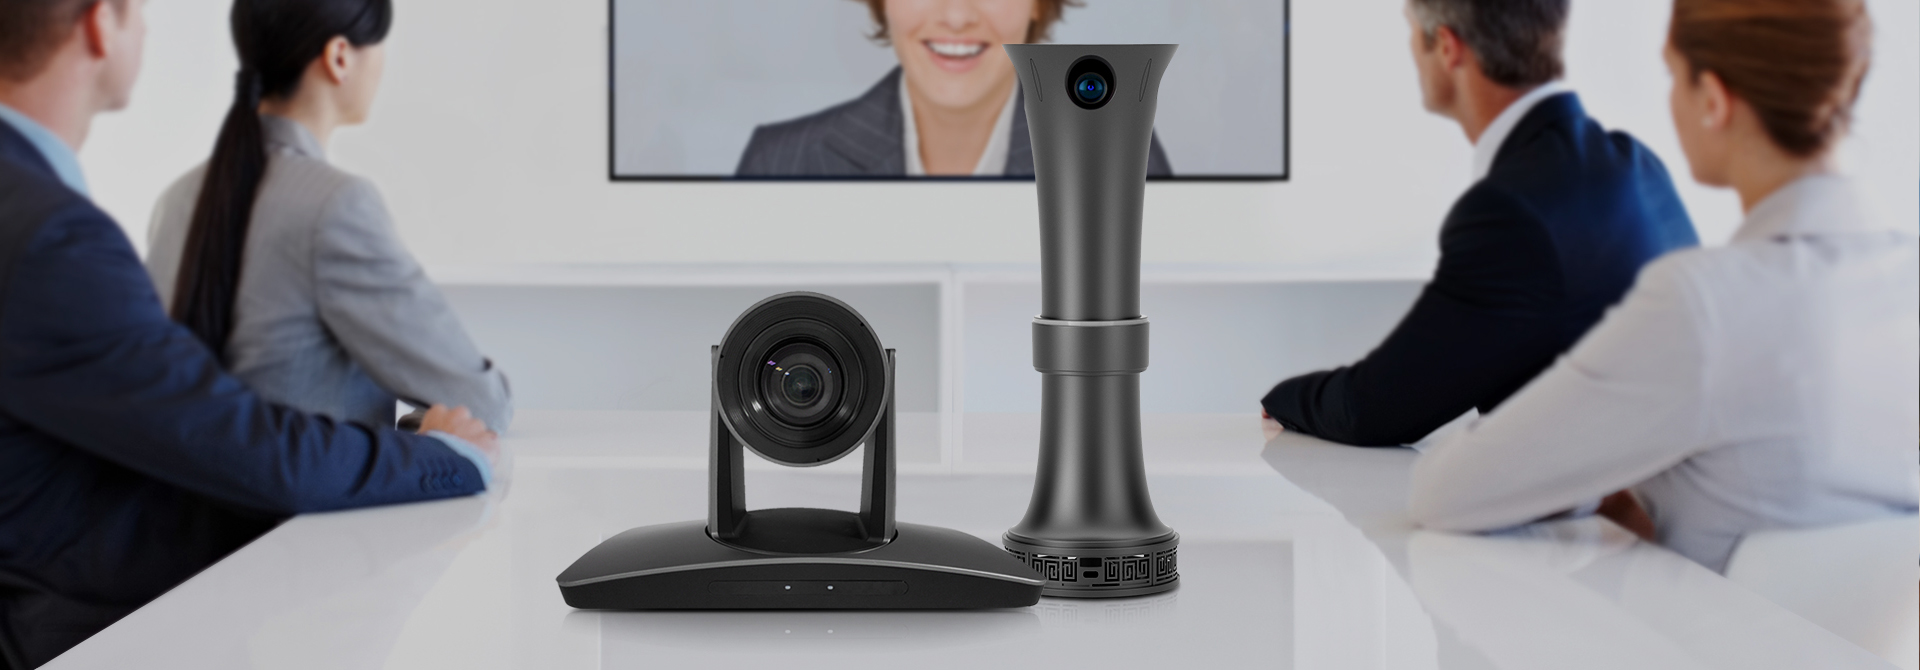 Система видео конференции